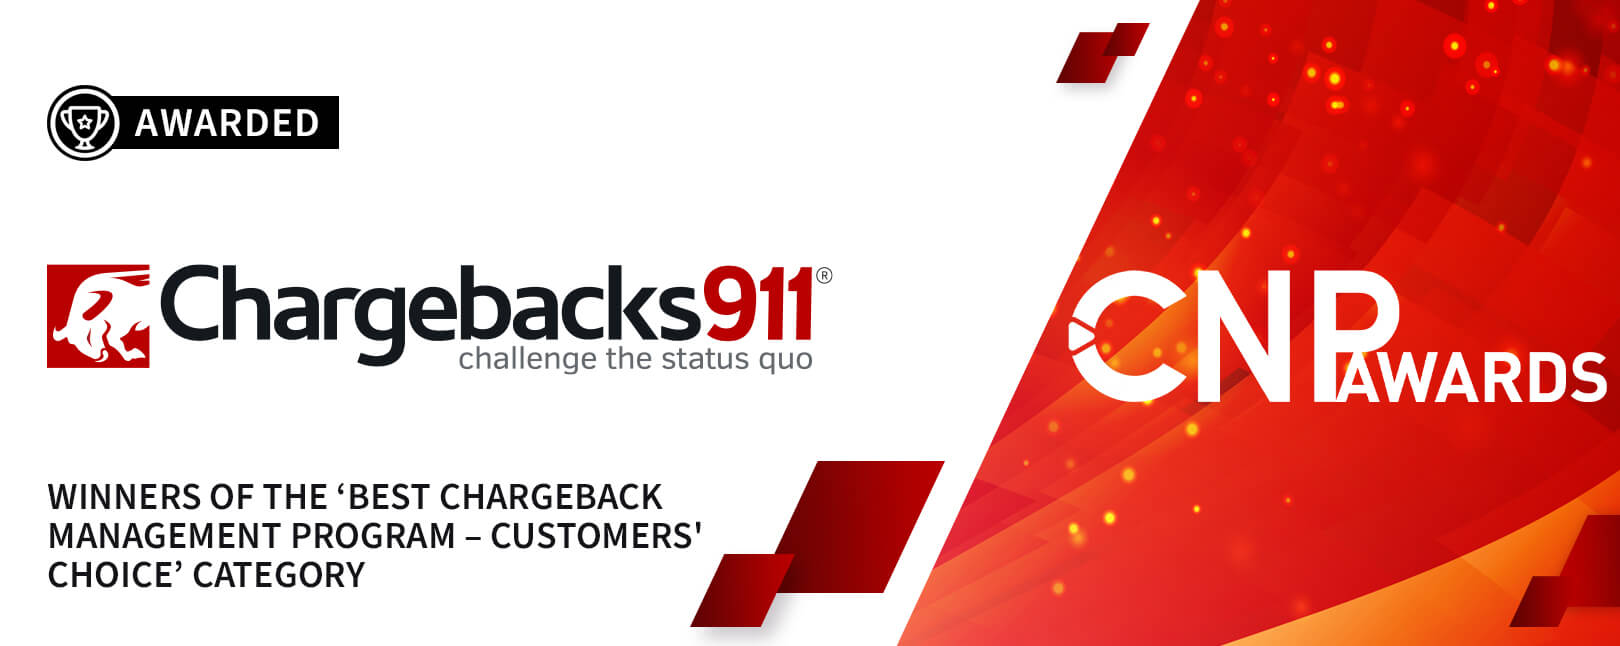 Chargebacks911®: The “Best Chargeback Management Program” for 2021!